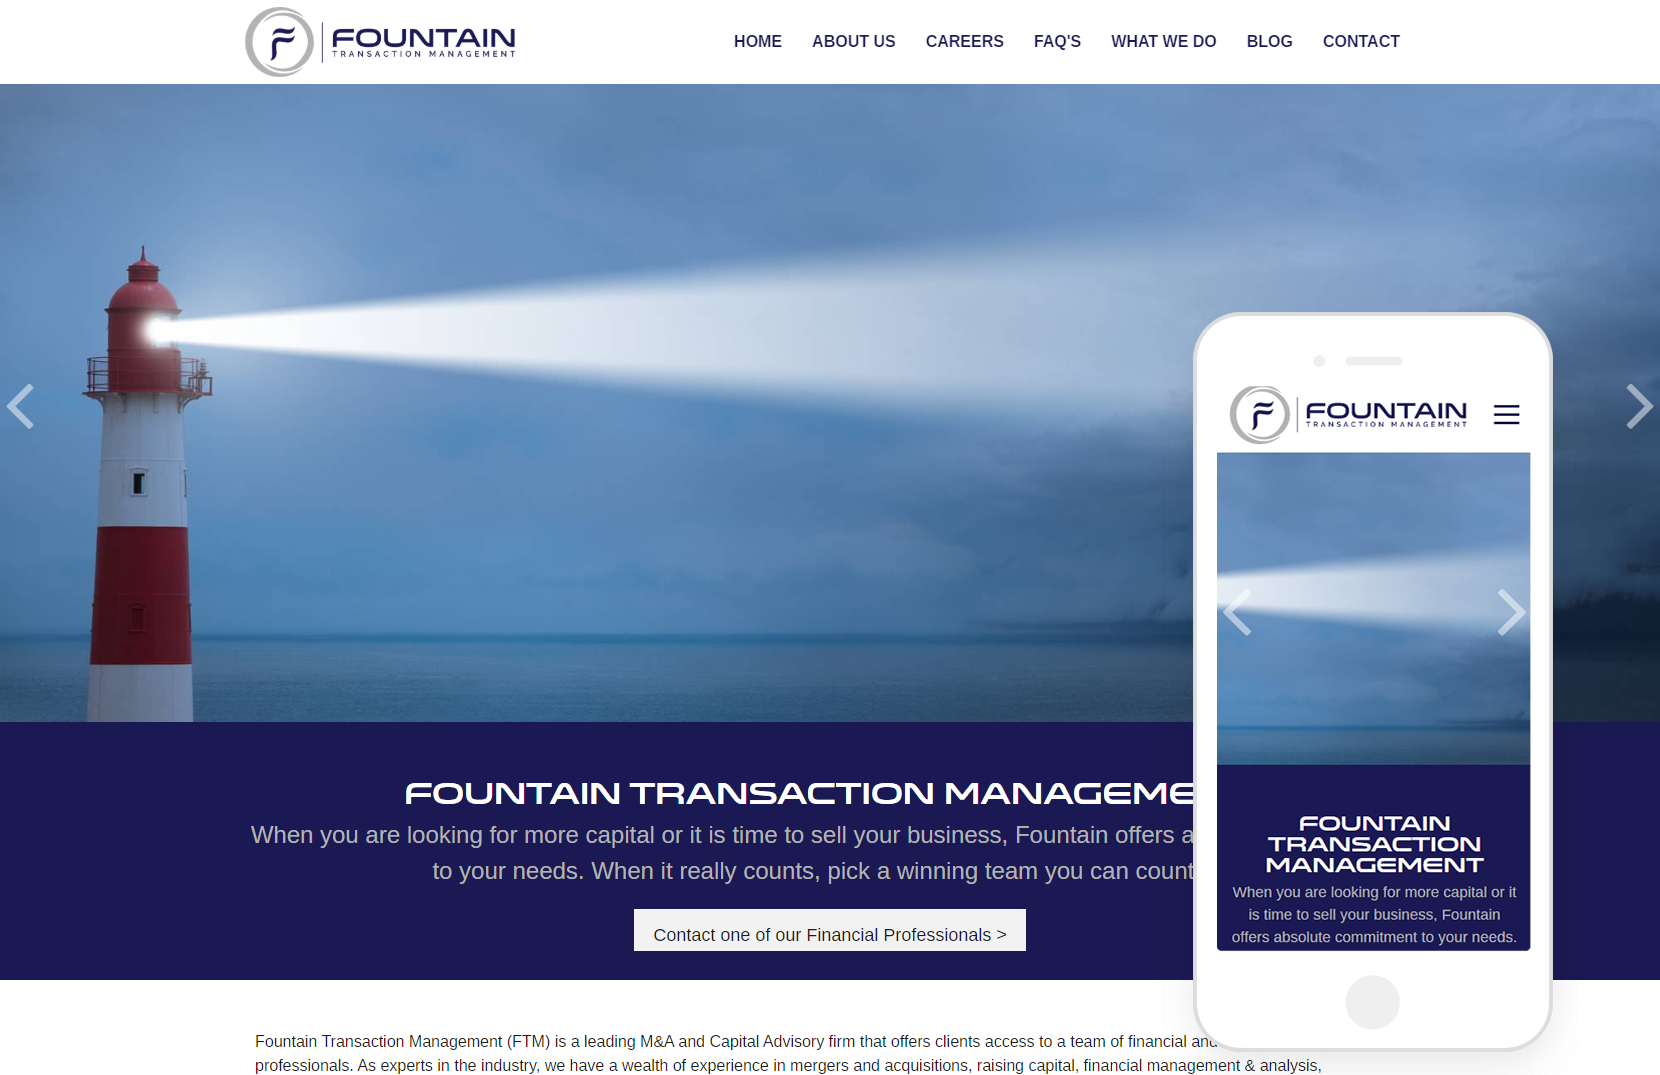 Fountain Transaction Management